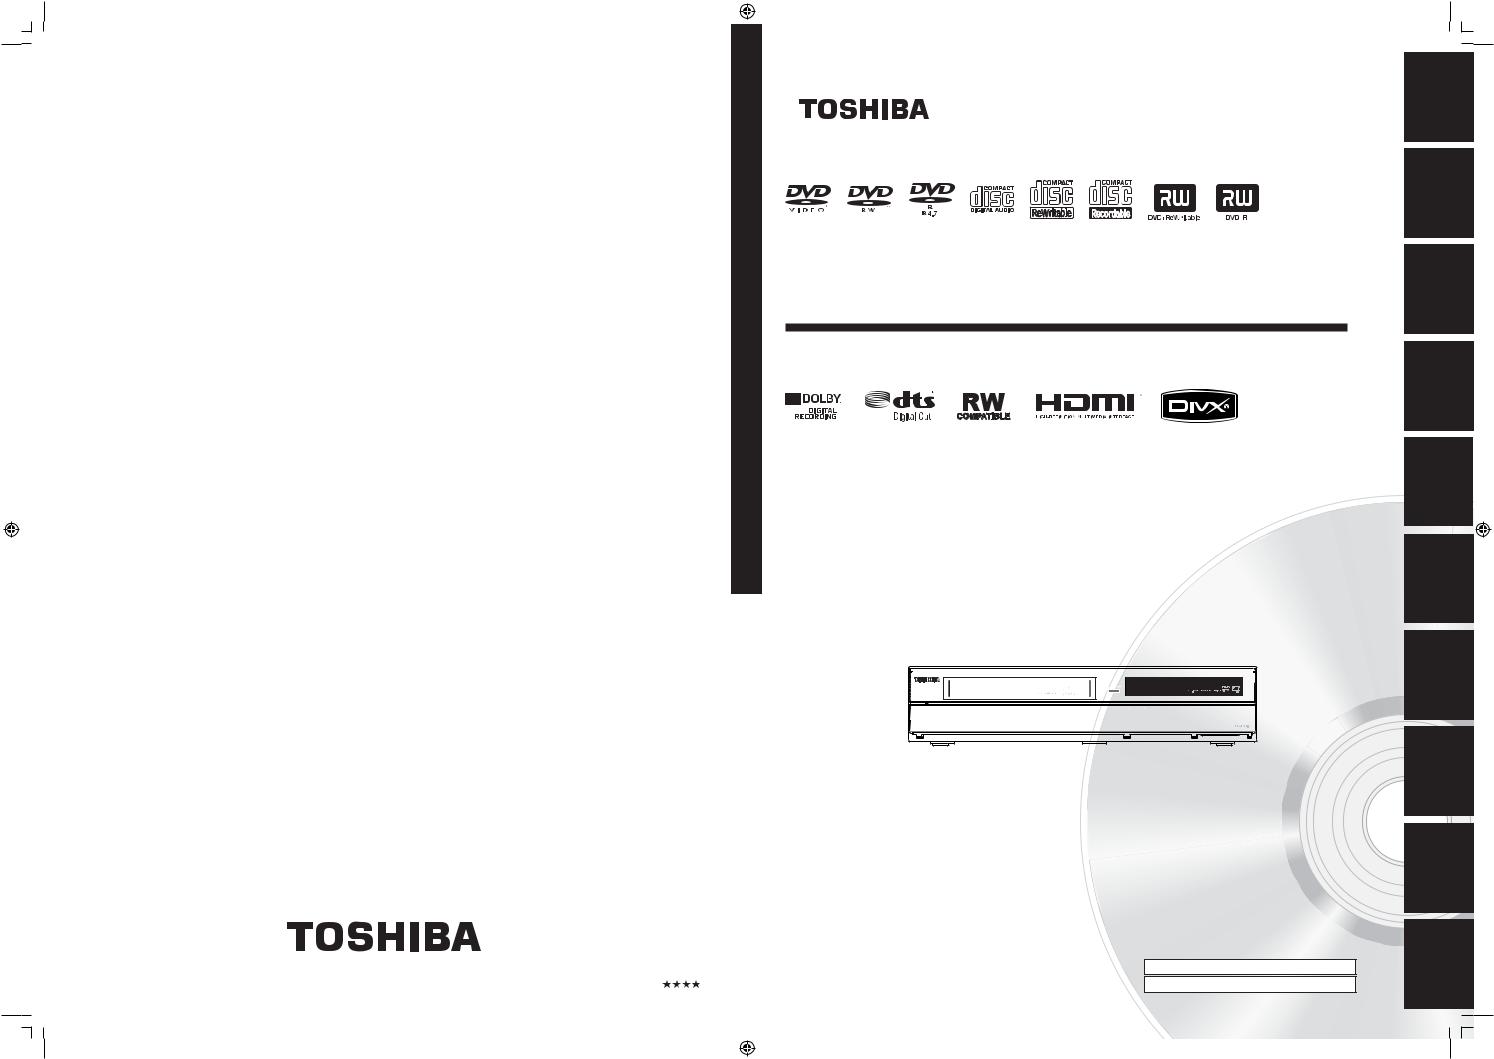 Toshiba DVR620KU User Manual